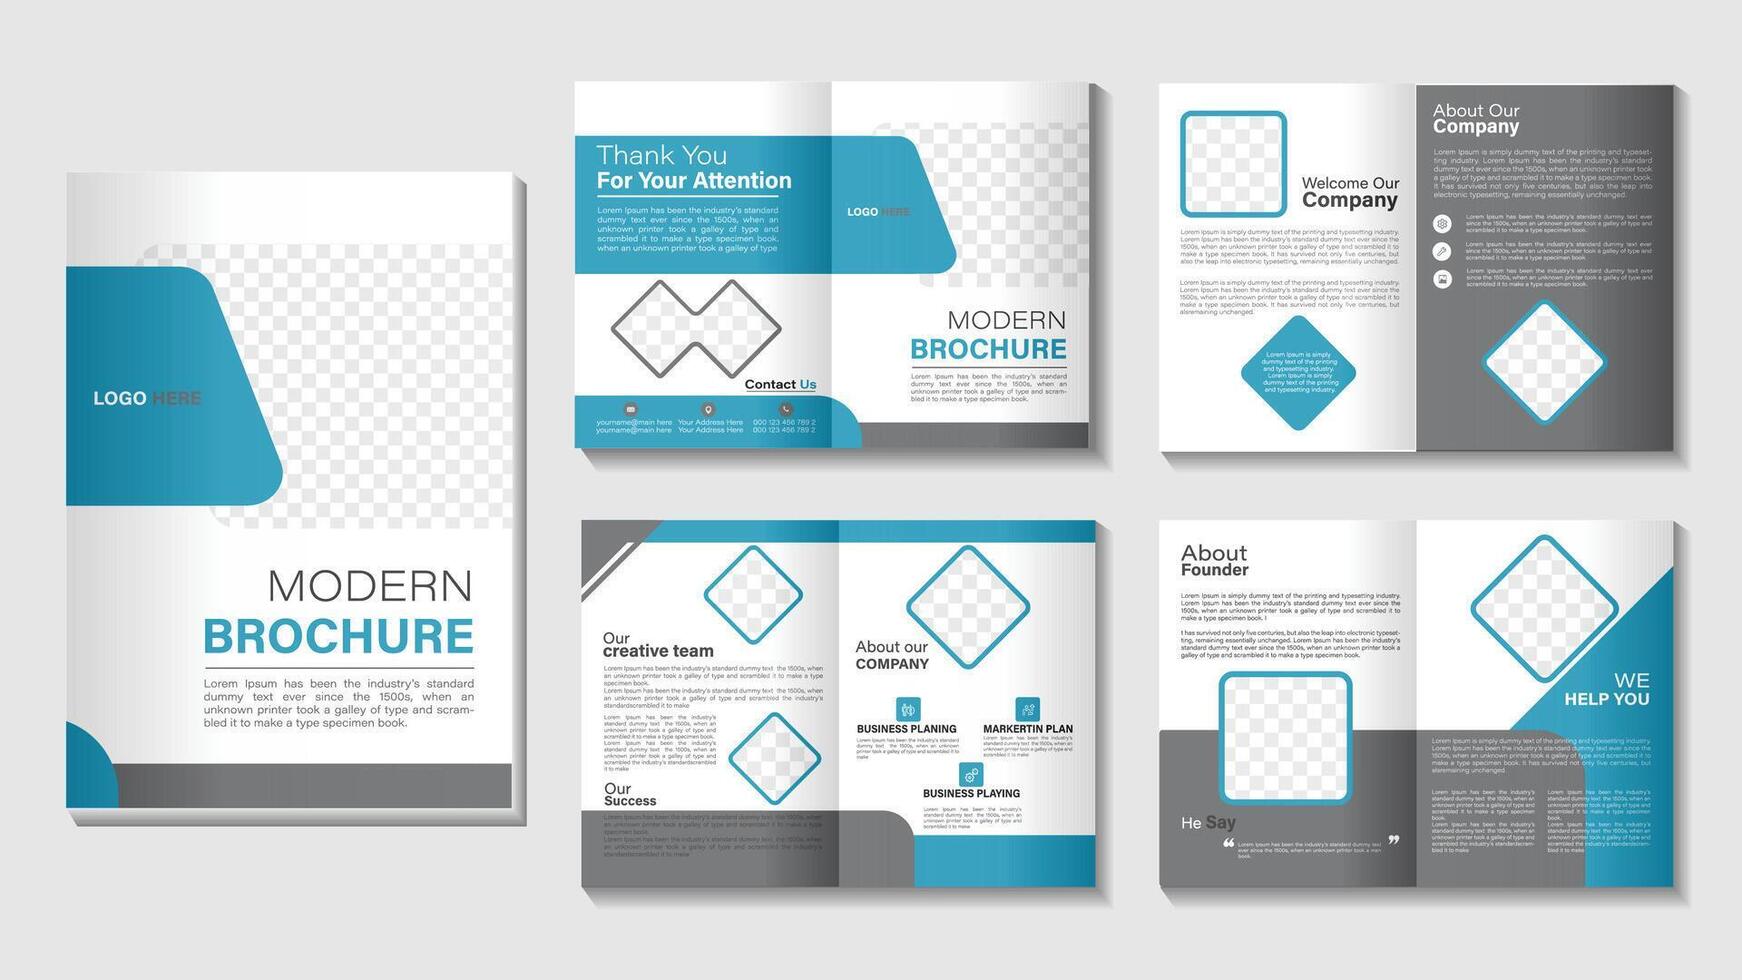 8 page company profile brochure design vector